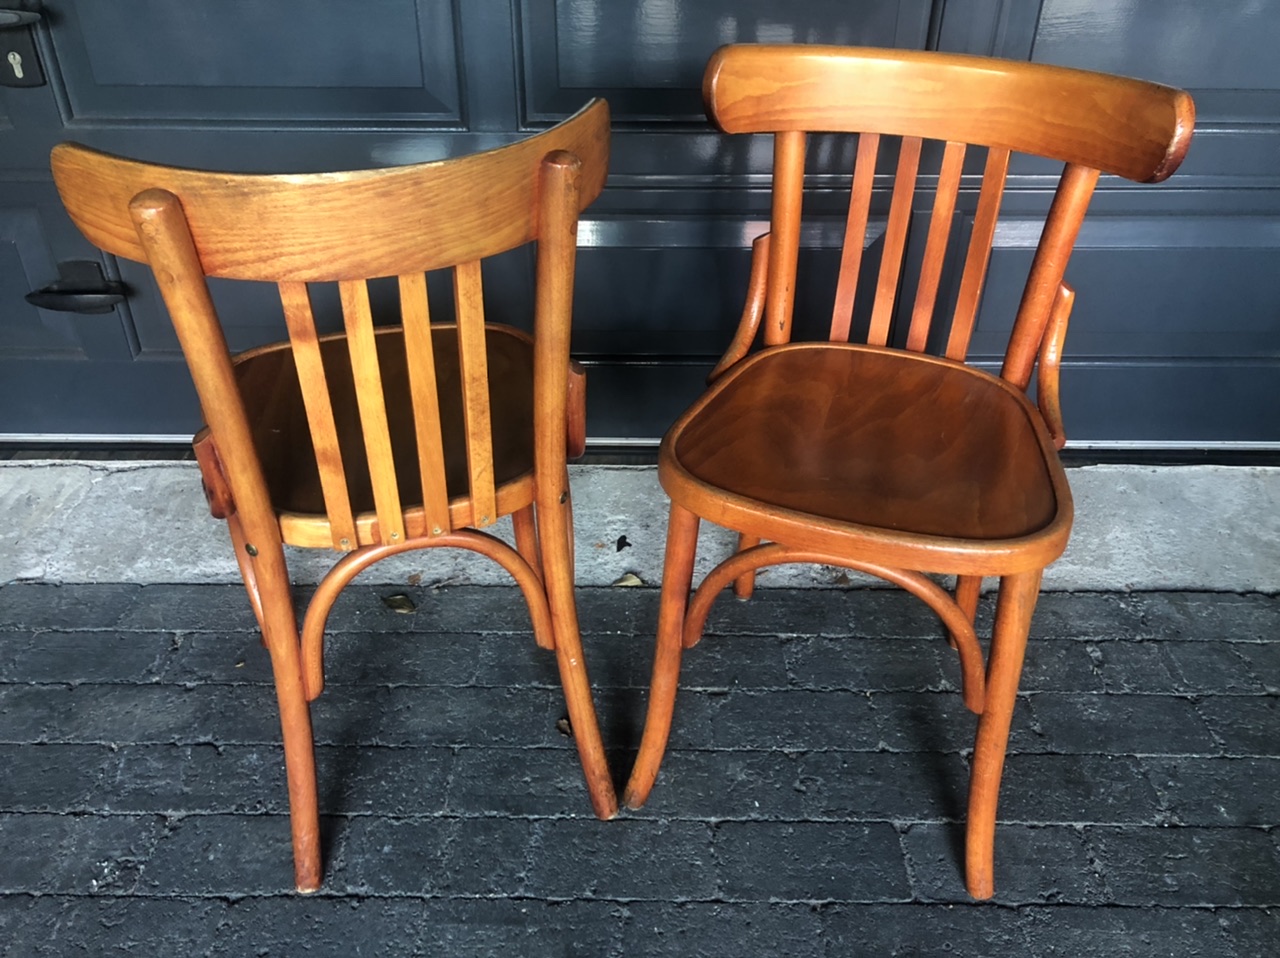 Cafestoelen de parel meubilair apeldoorn kroeg stoelen bar mancave meubilair apeldoorn